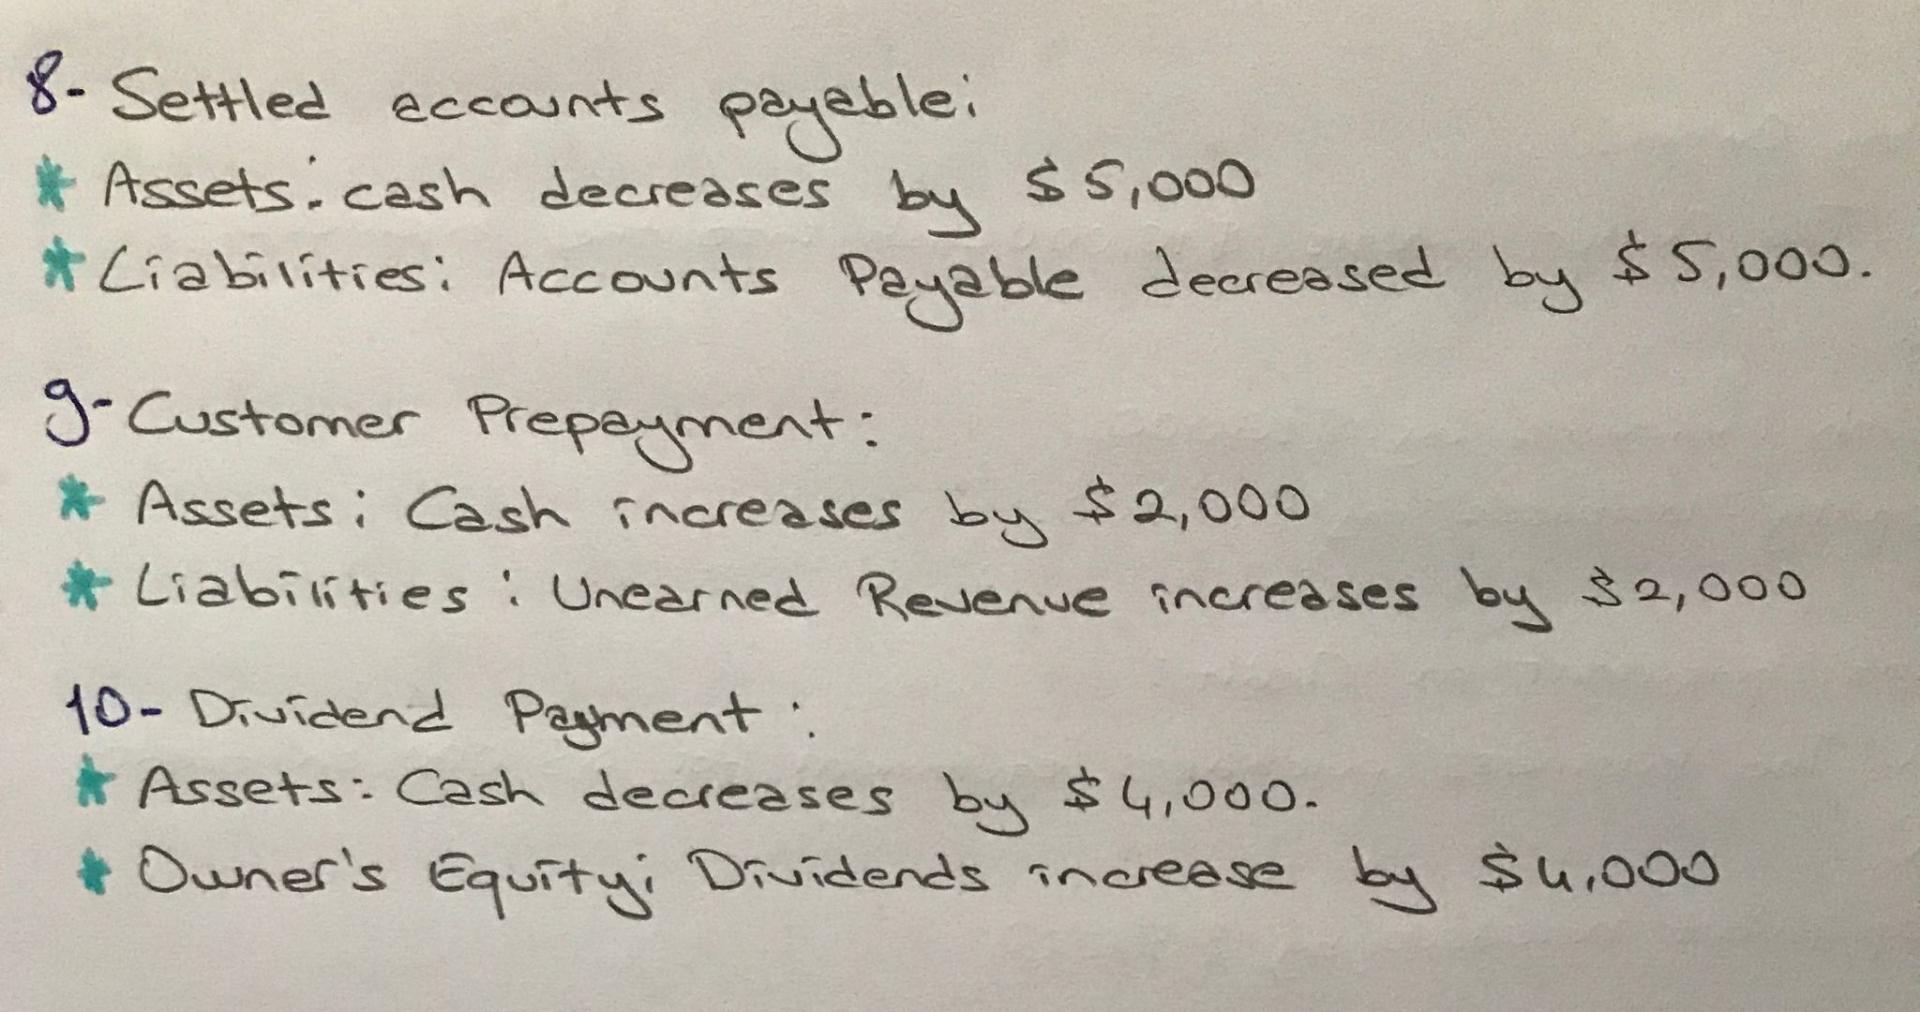 8- Settled accounts payablei *Assets: cash decreases by $5,000 *Liabilities: Accounts Payable decreased by